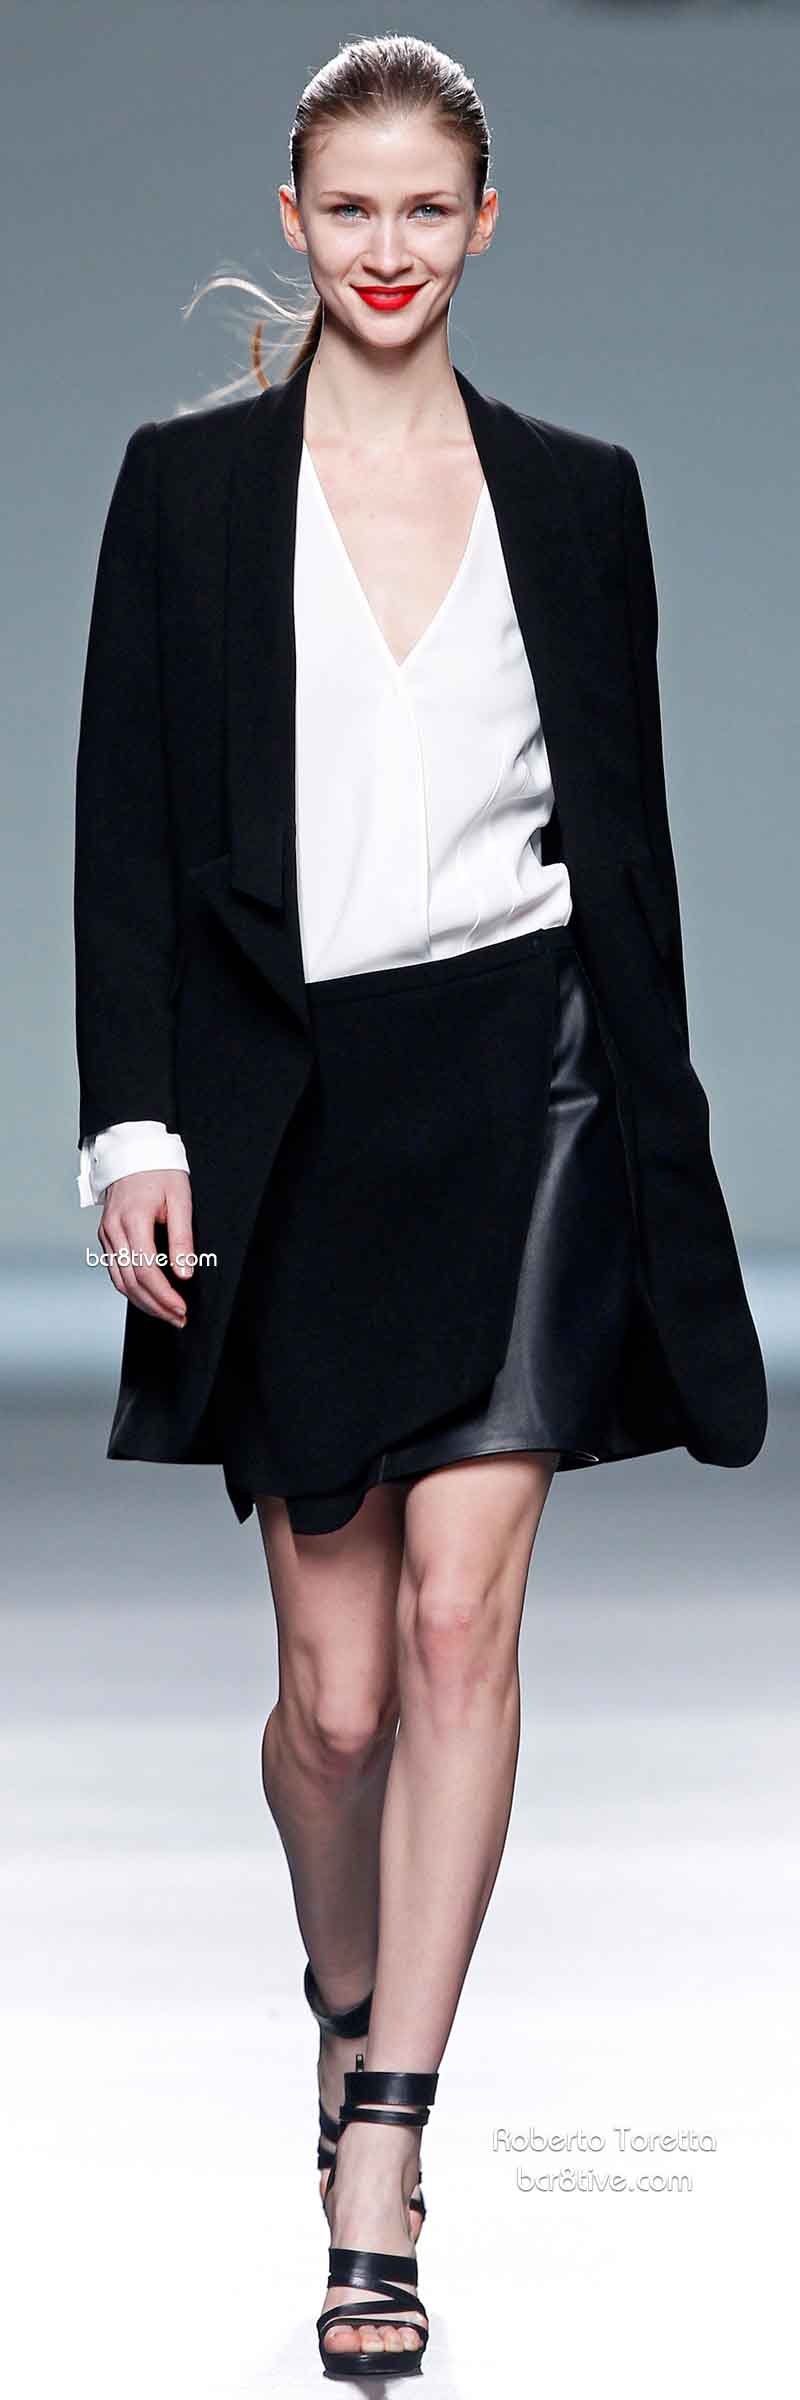 Fall 2014 Menswear Inspired Fashion - Roberto Torretta